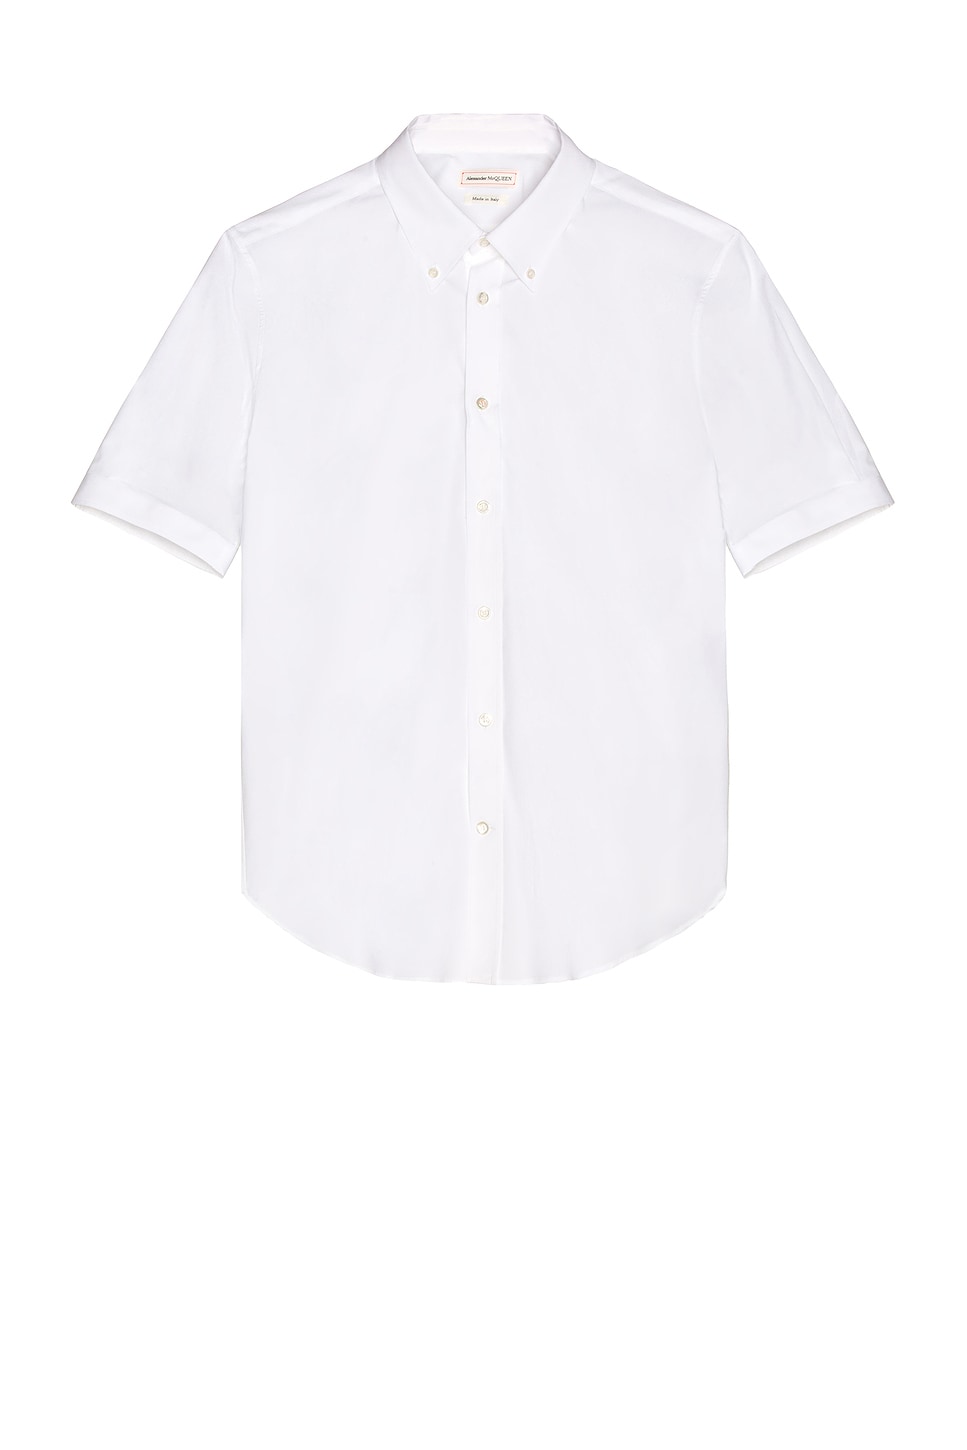 Image 1 of Alexander McQueen Short Sleeve Shirt in White